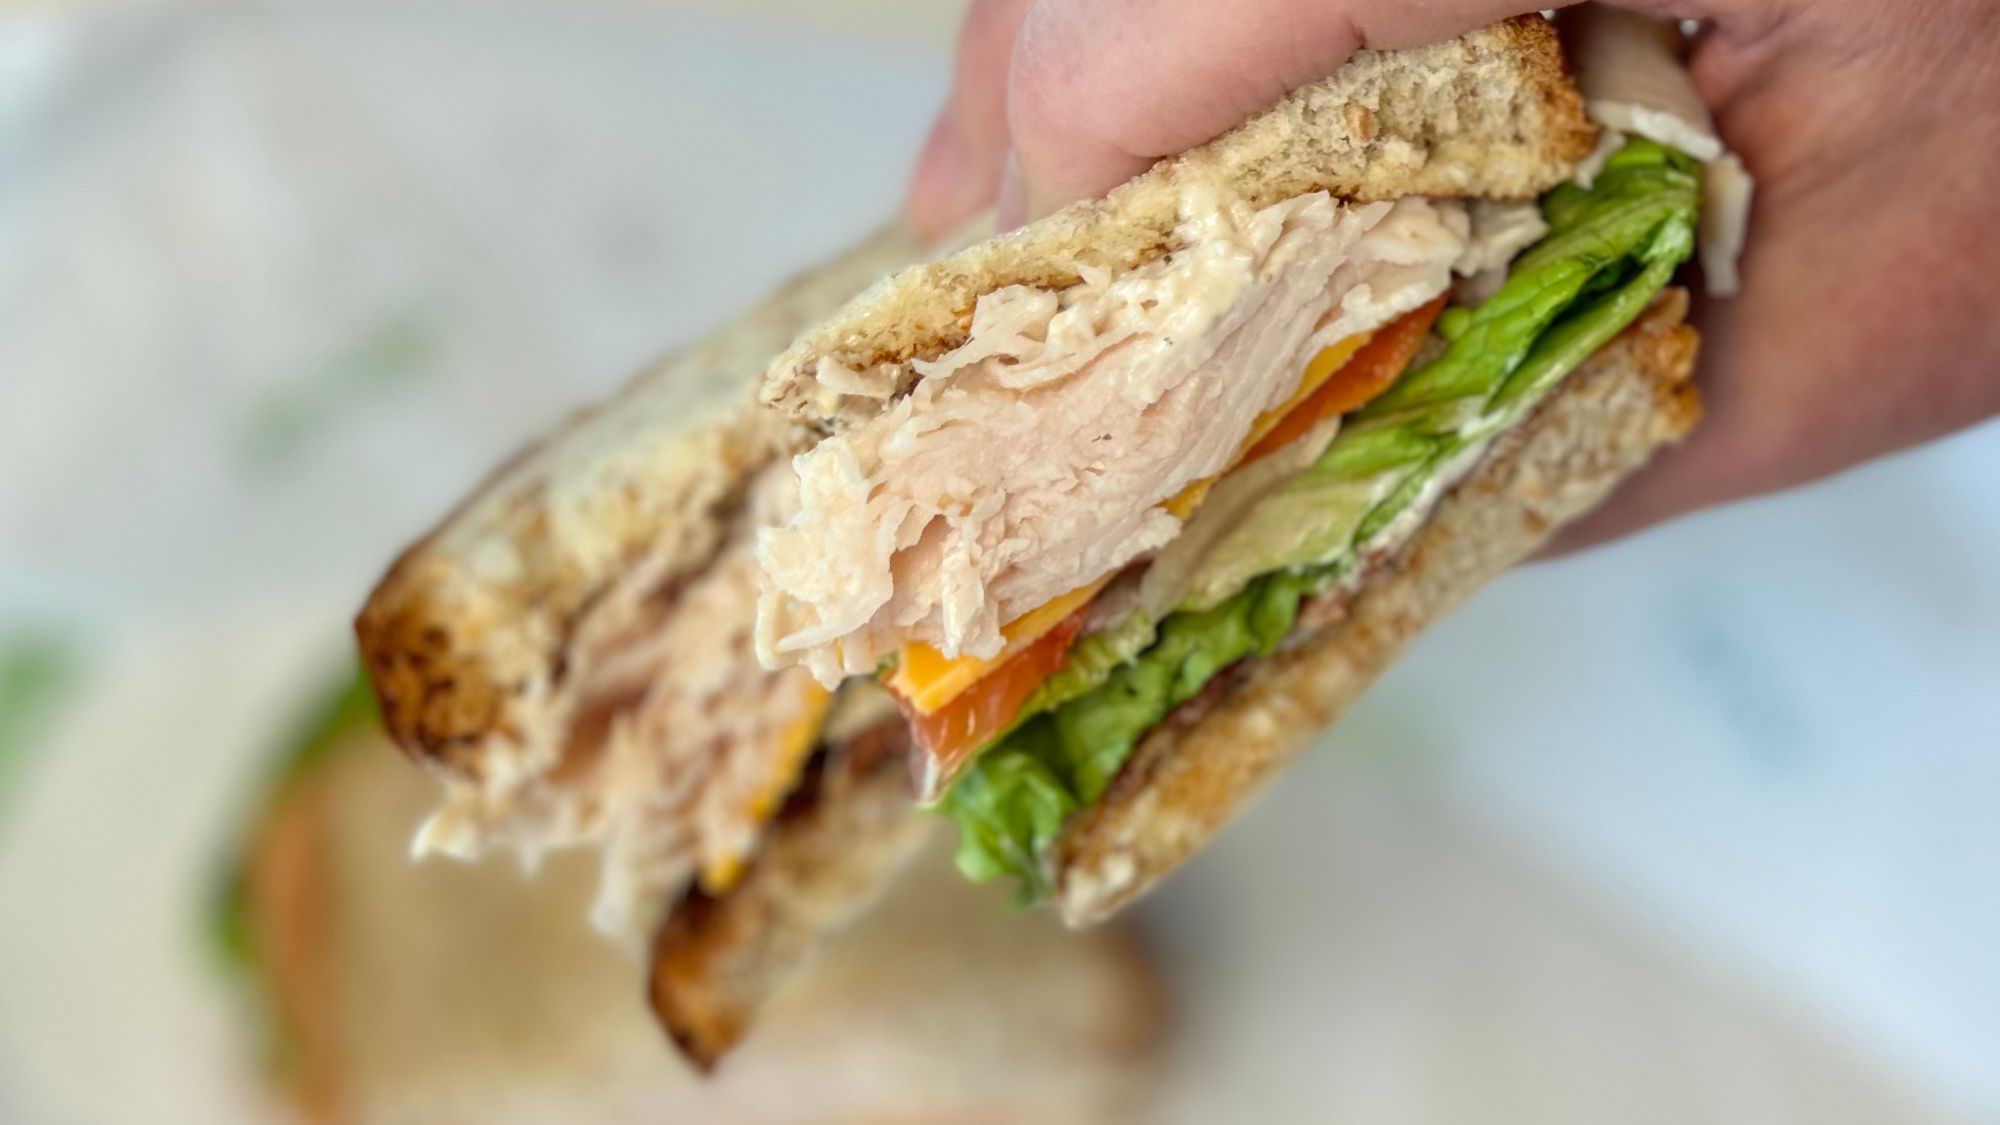 Arby's Turkey Sandwich